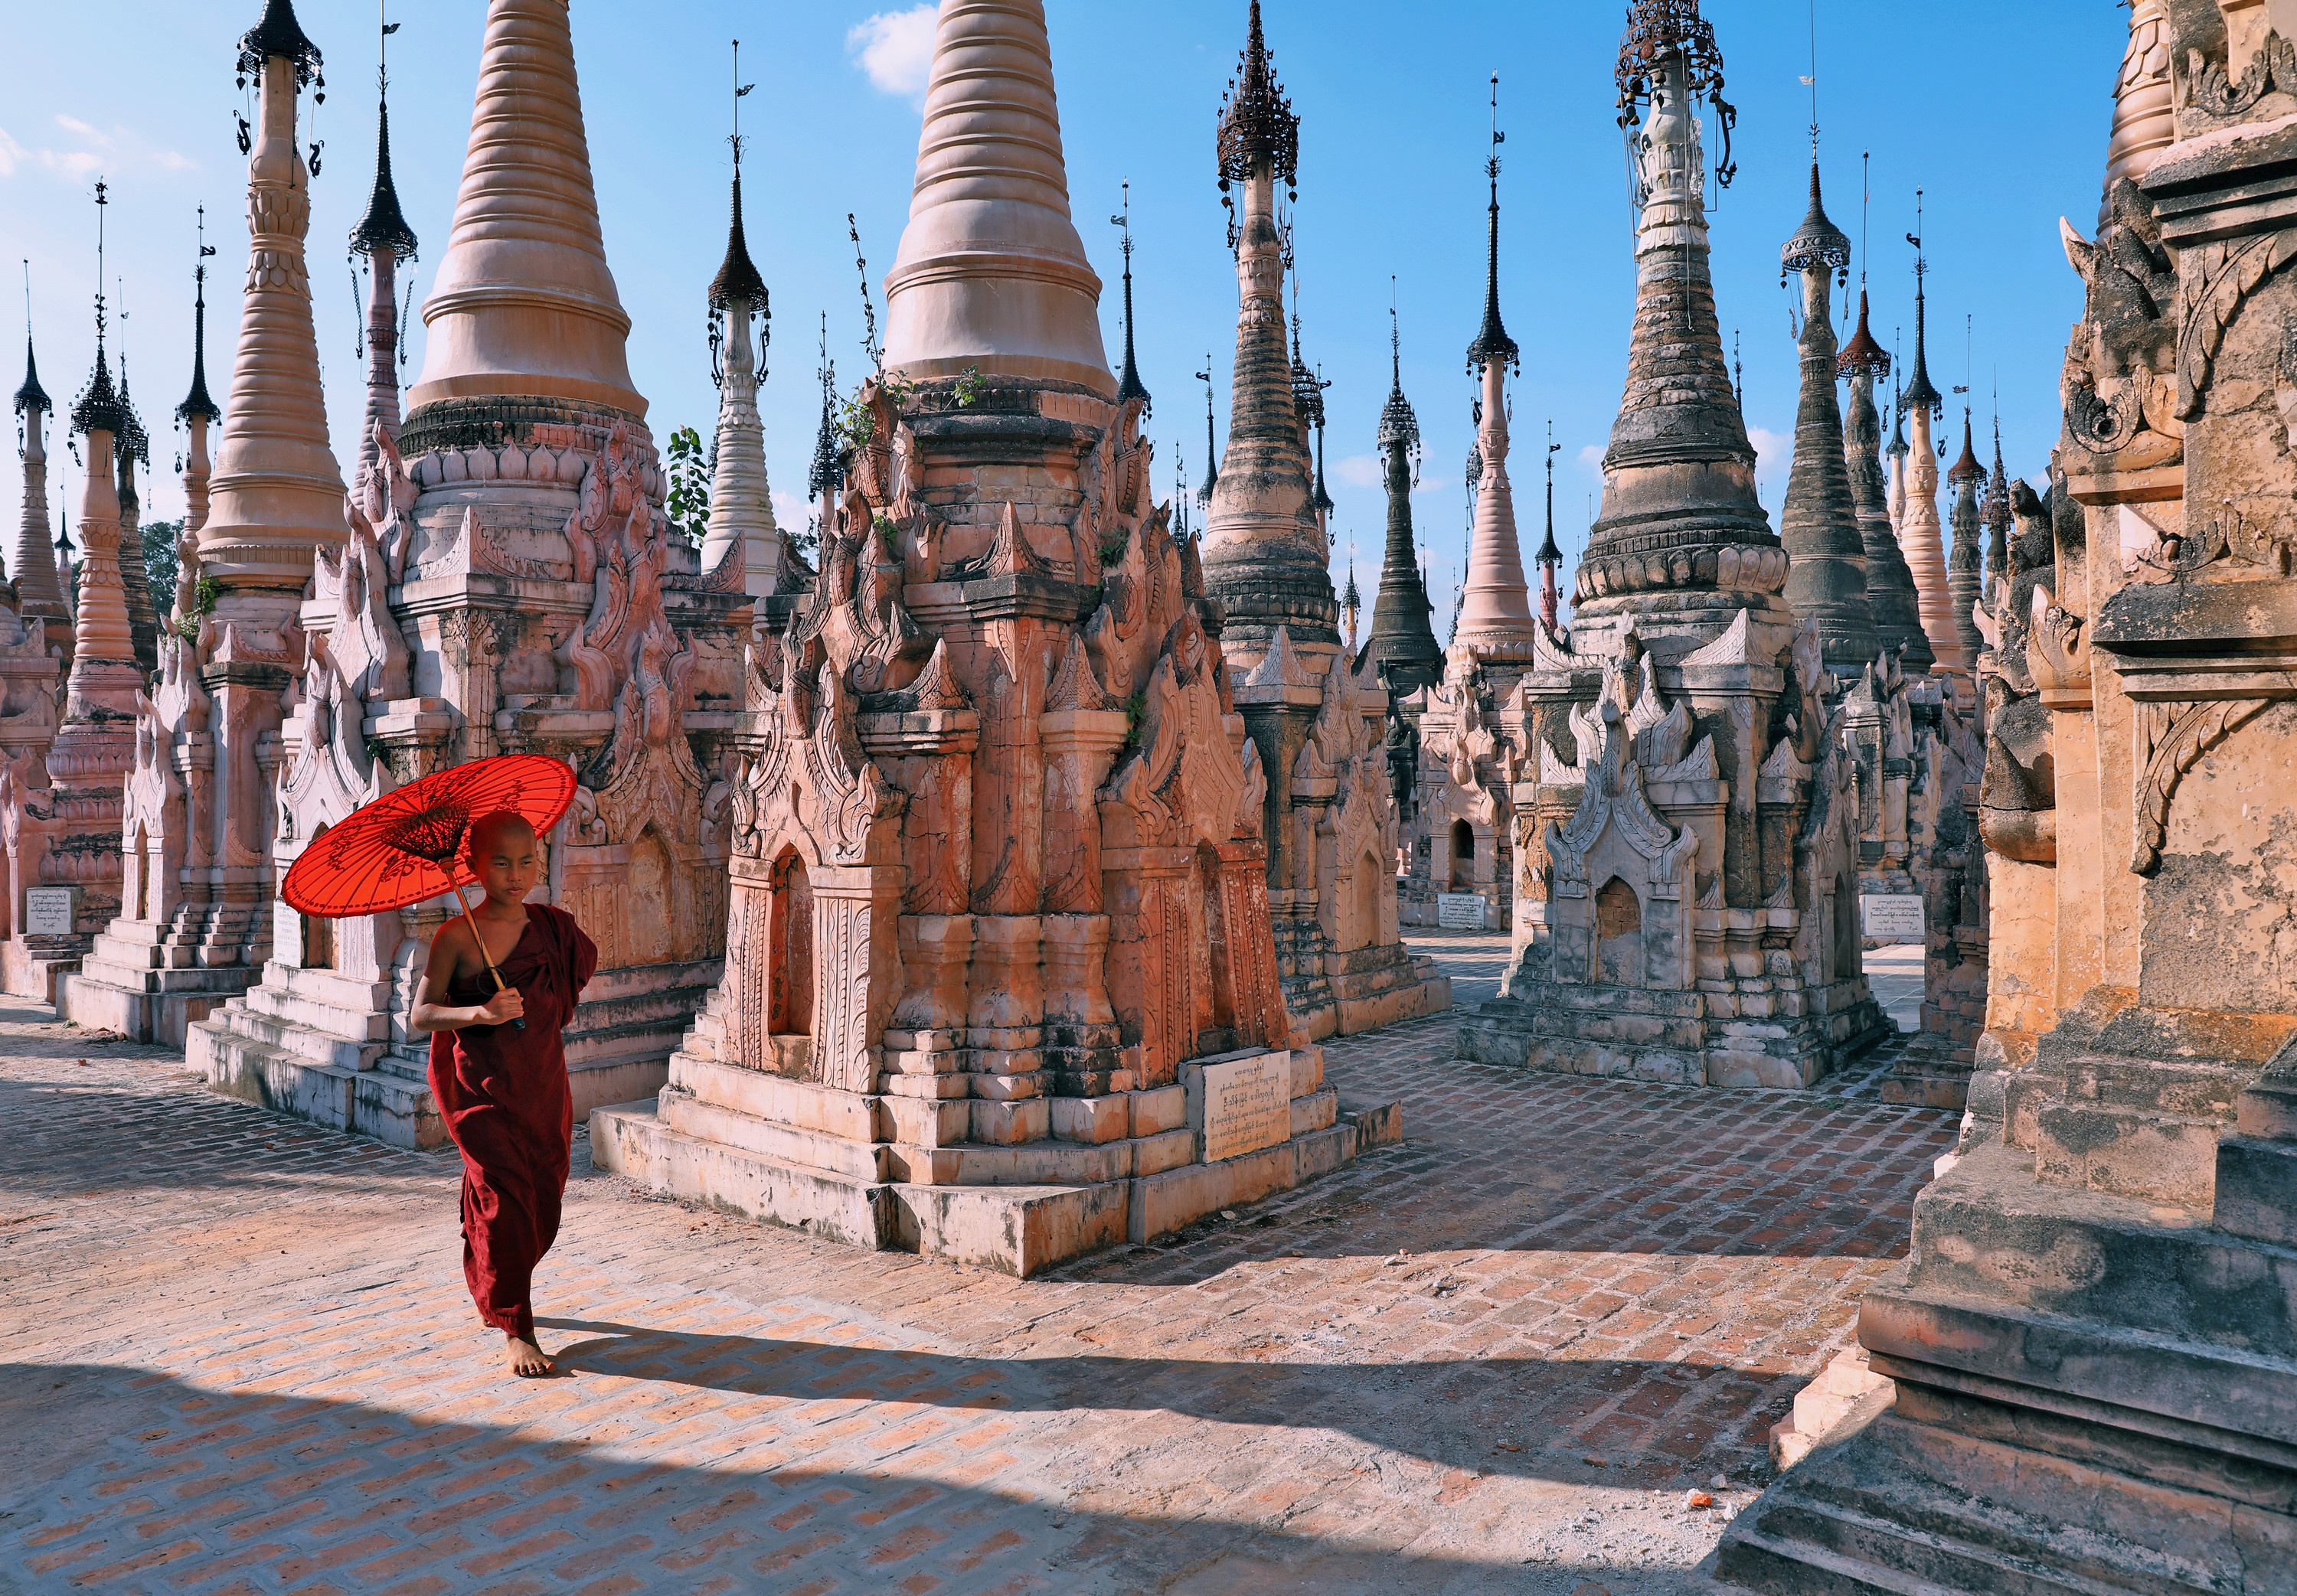 985891 descargar imagen religioso, pagoda, pagodas kakku, birmania: fondos de pantalla y protectores de pantalla gratis